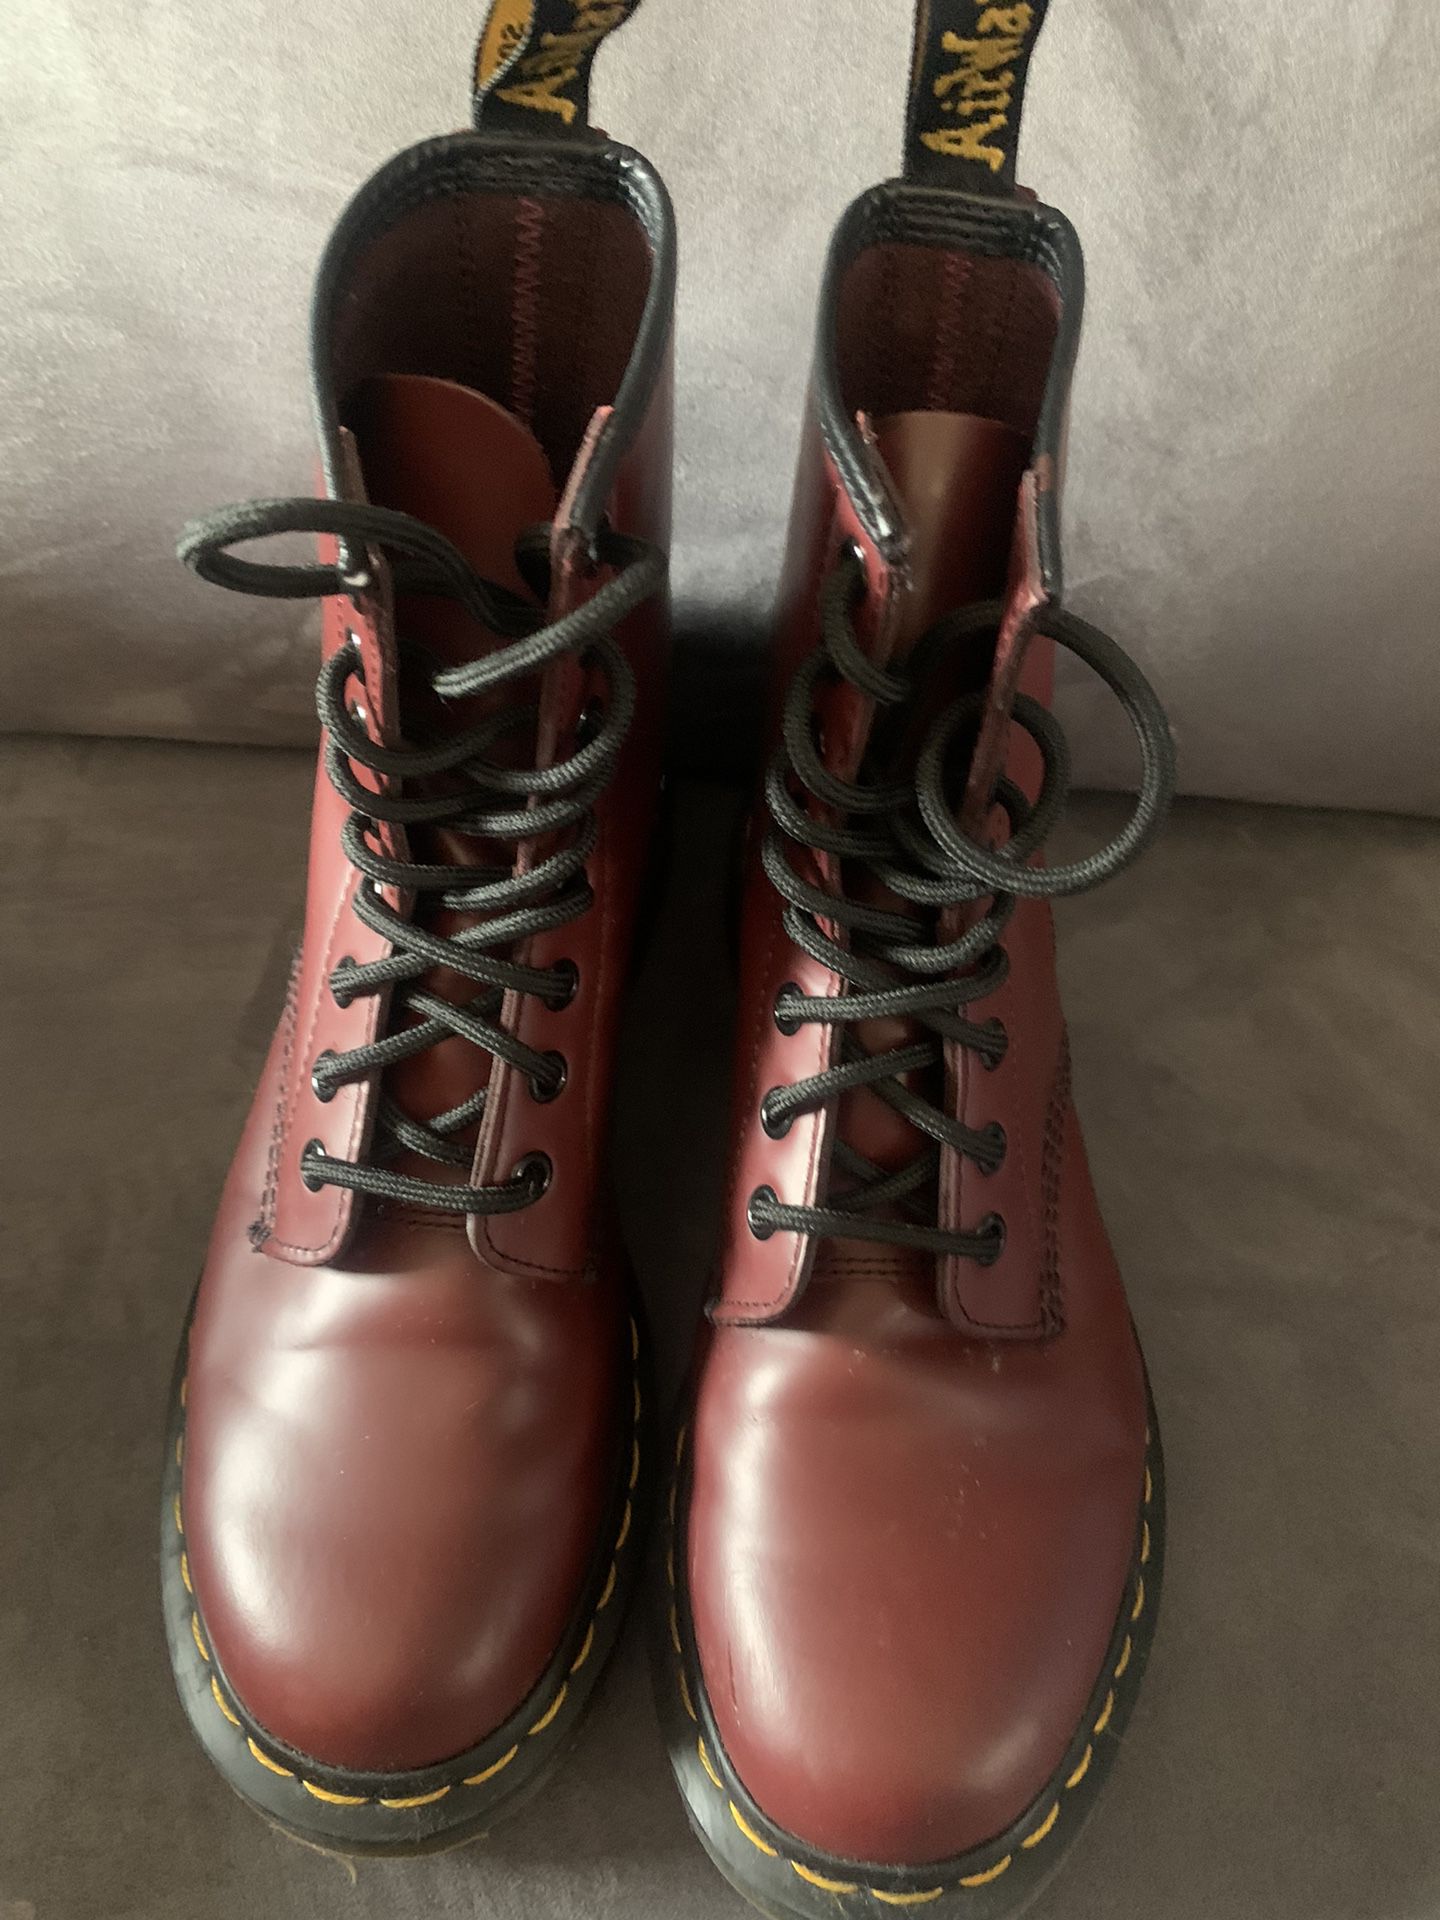 Dr Martens / Timberland Boots 